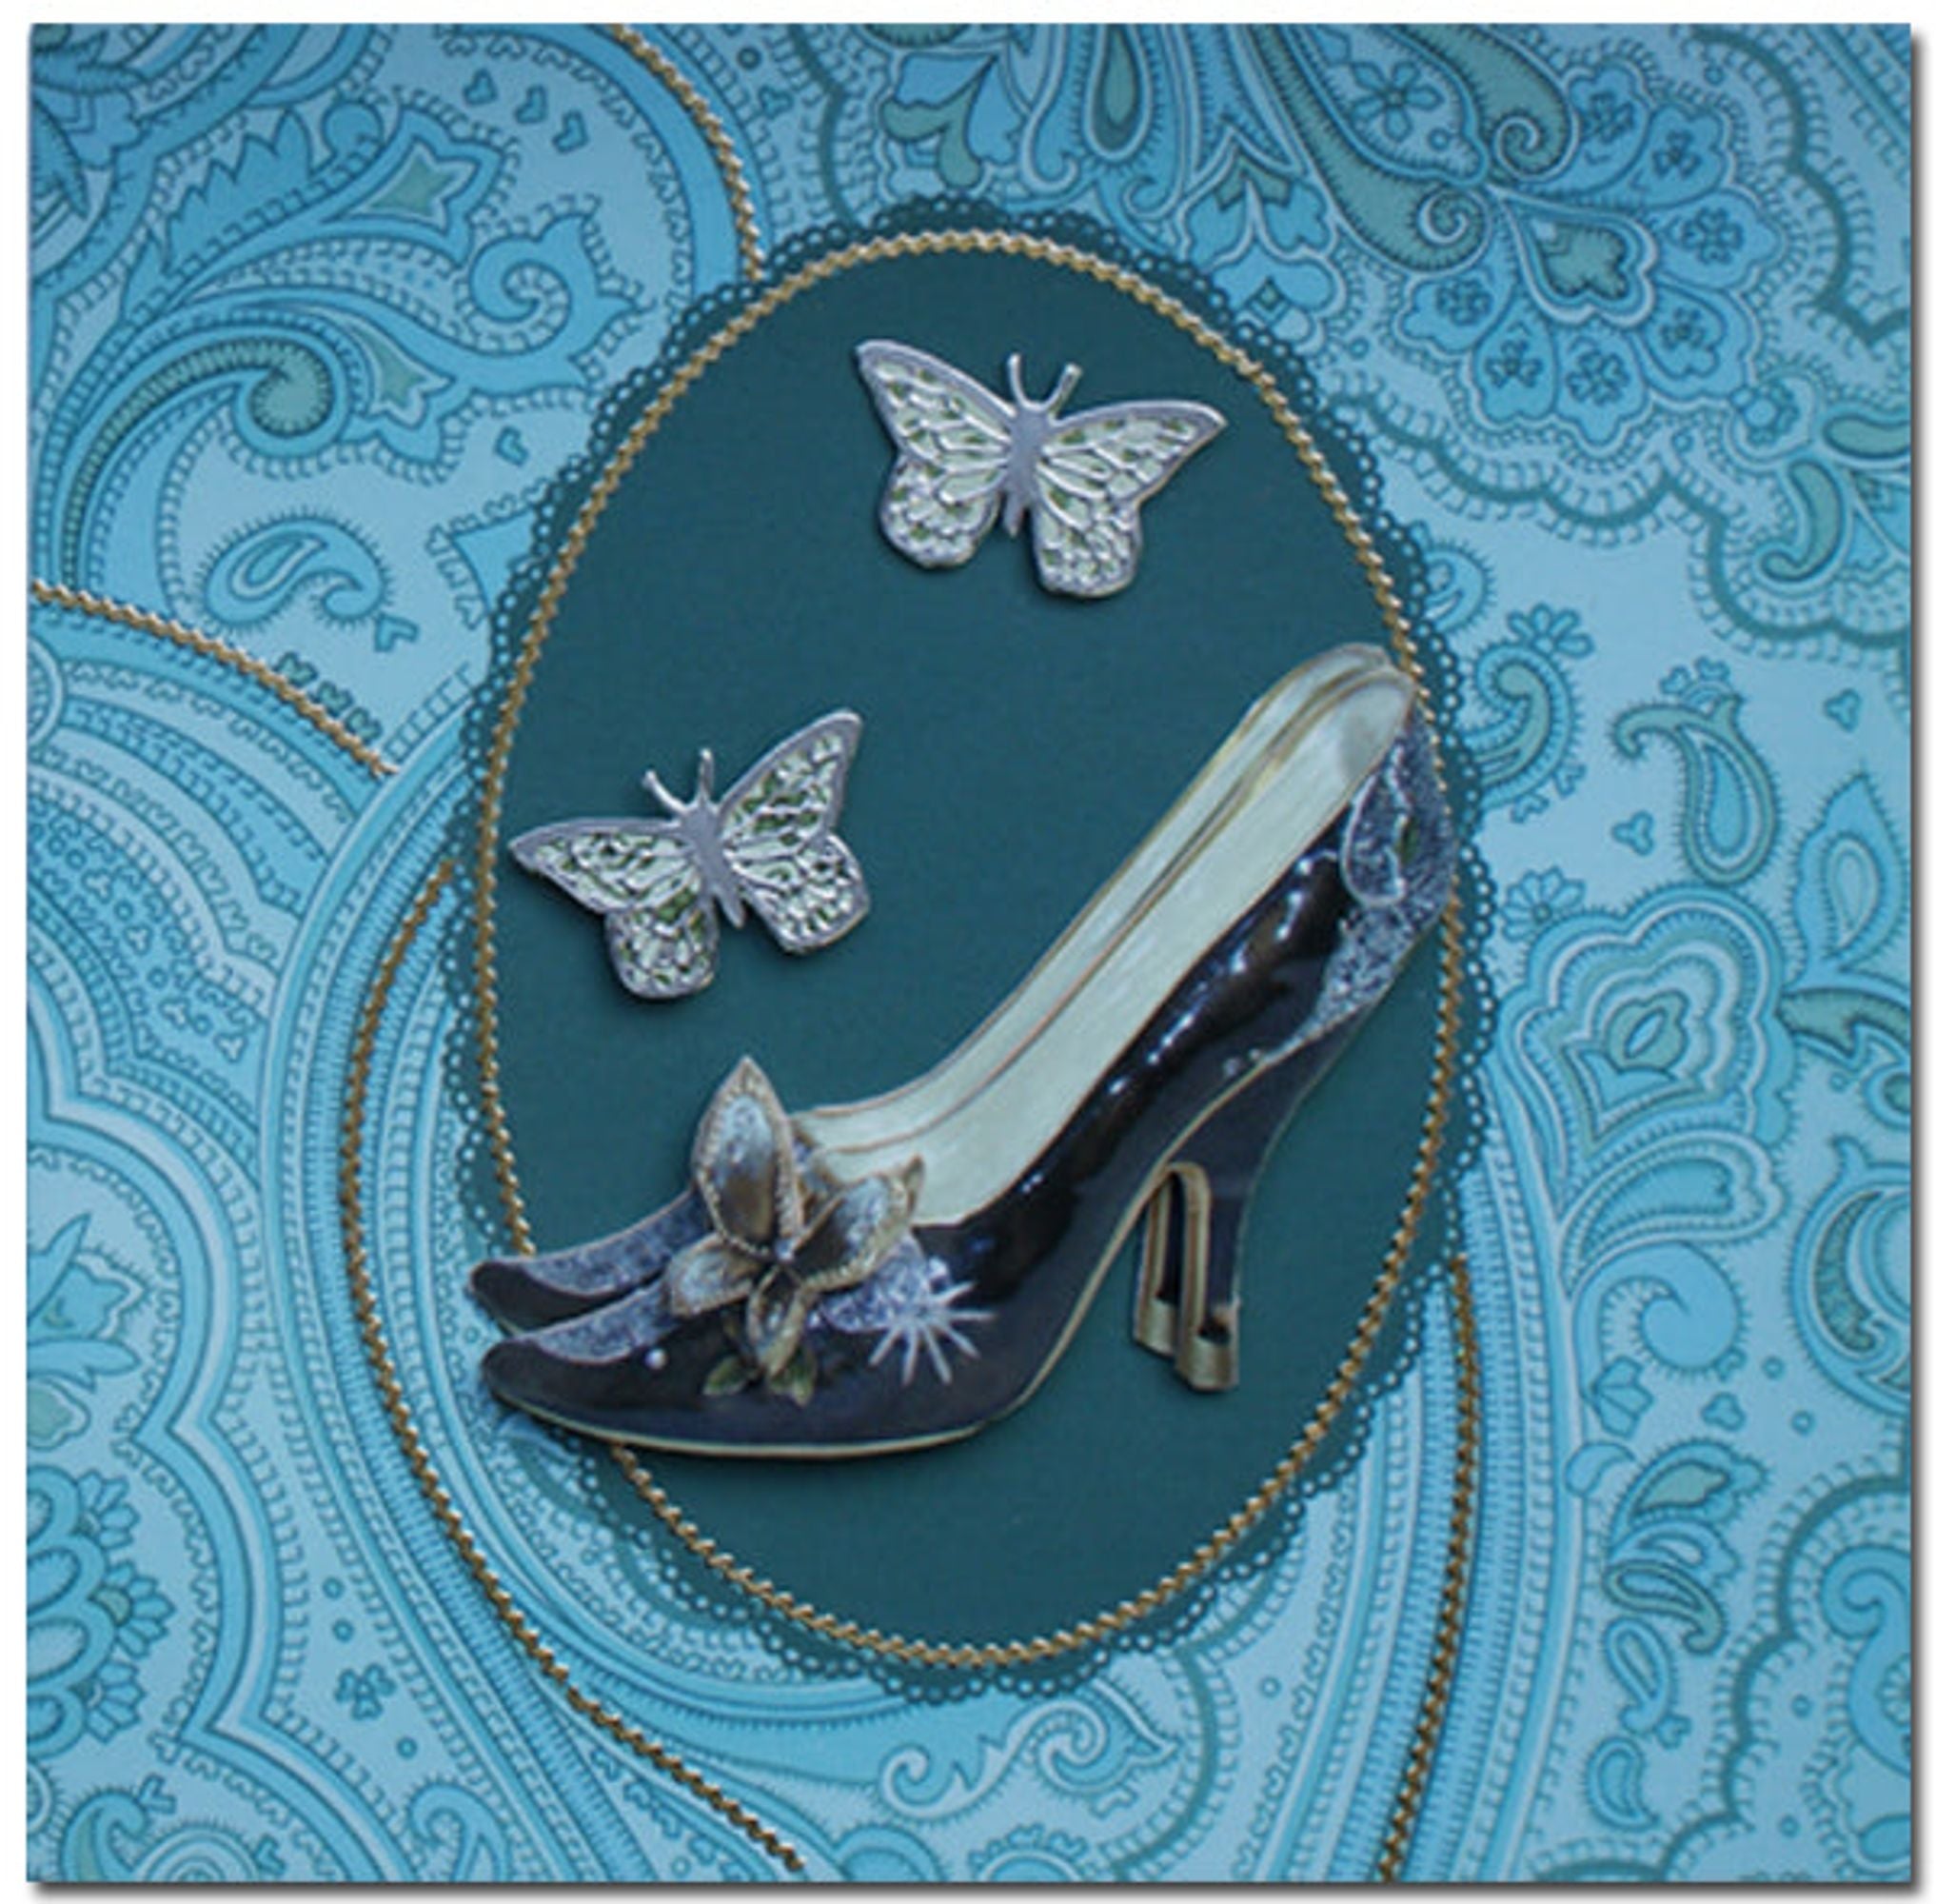 Luxury Dress Up Cards - Blue Oval